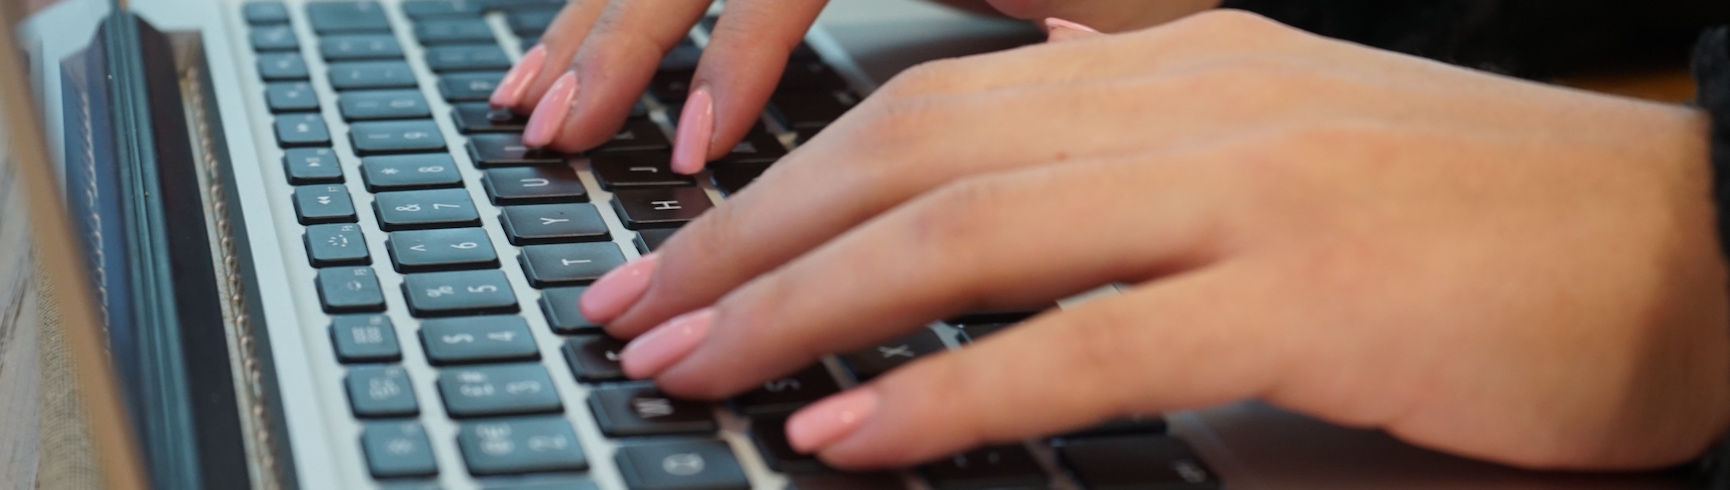 Student using keyboard